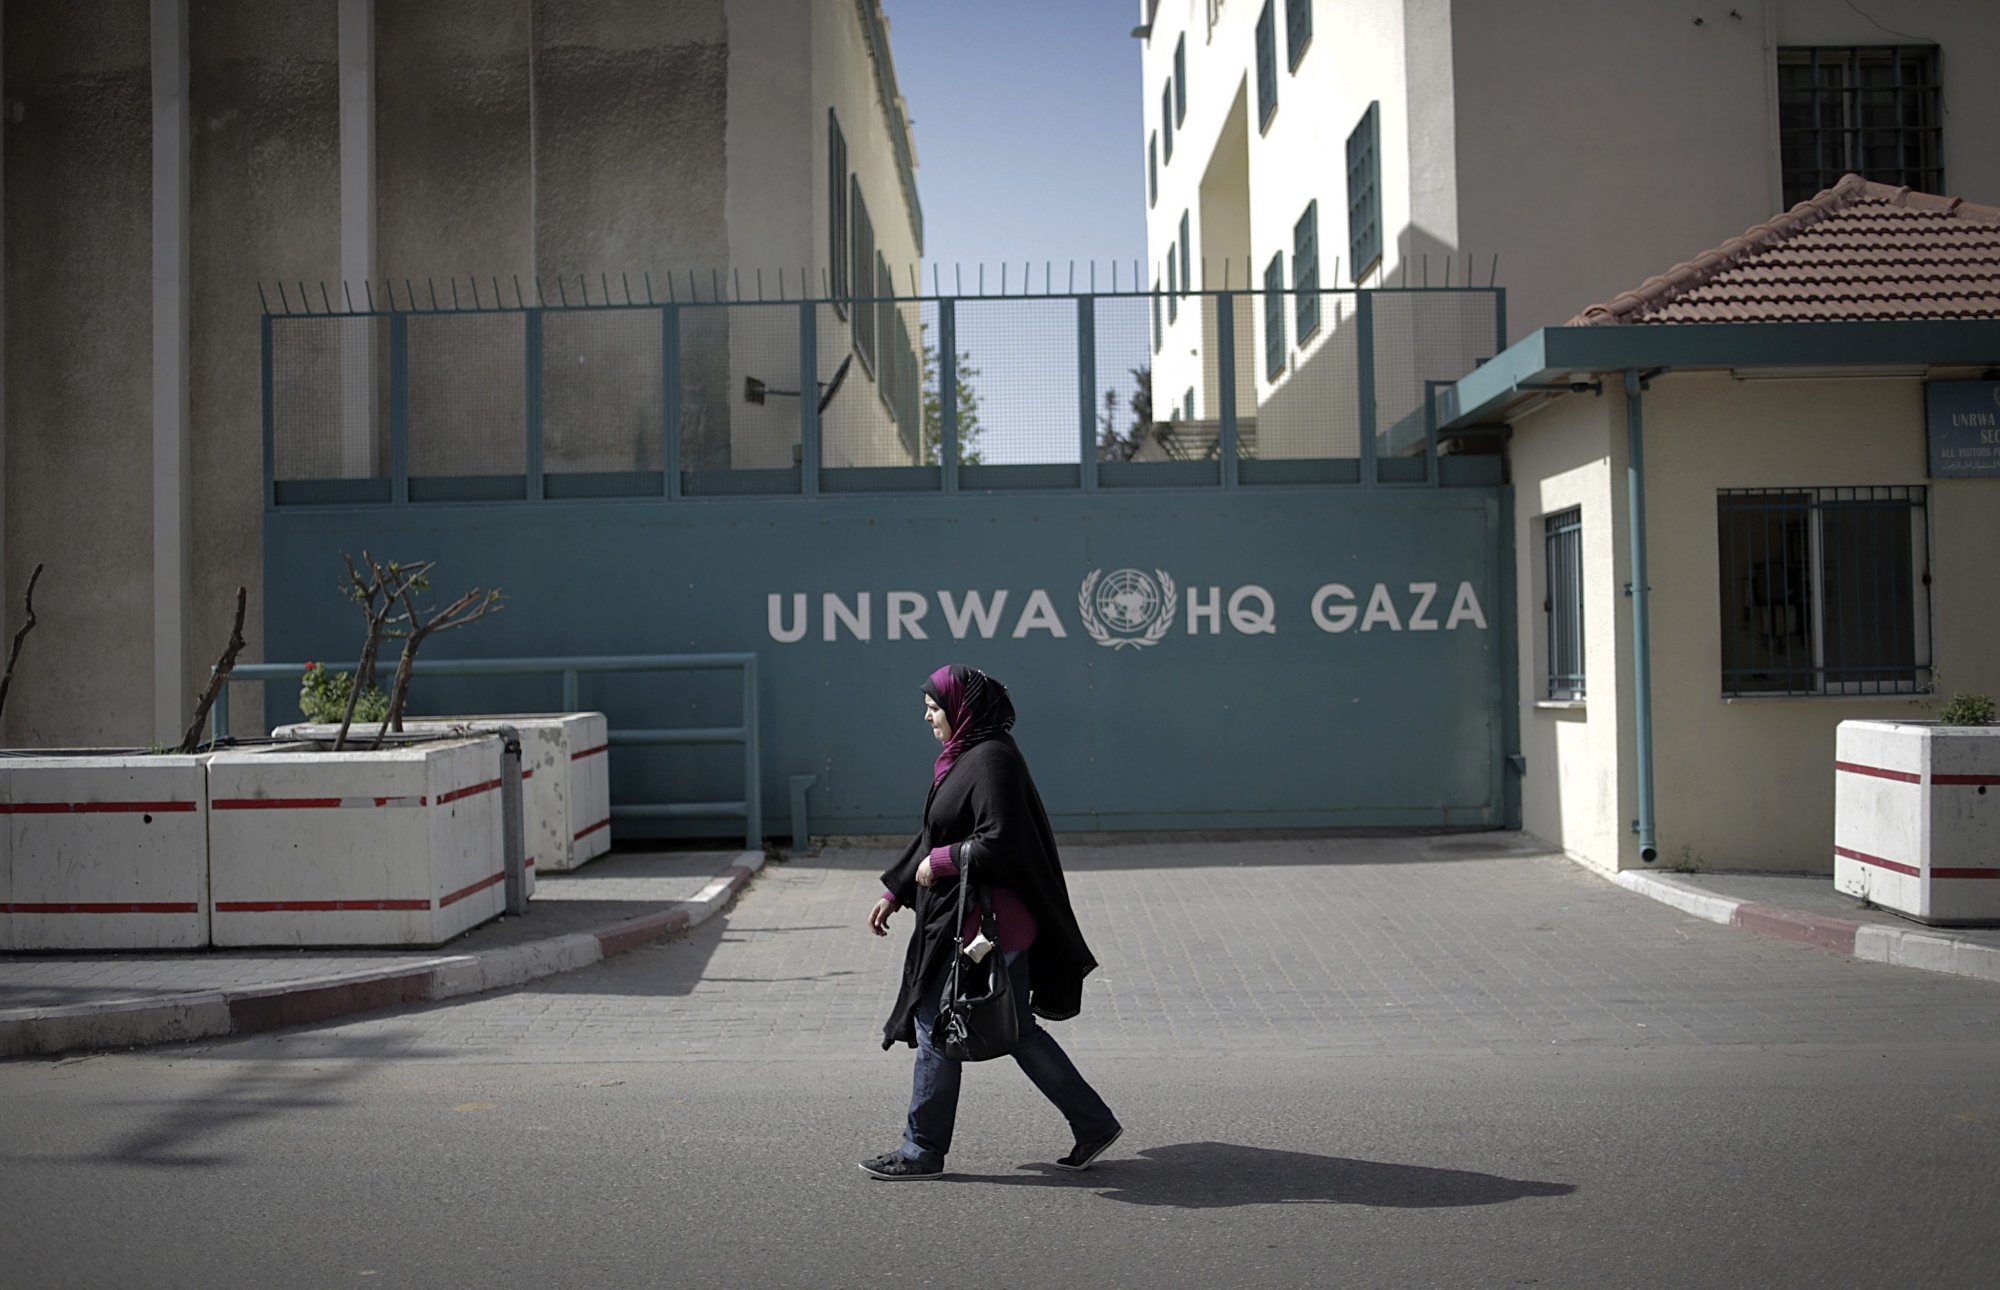 UNRWA: Ανεξάρτητη έρευνα δικαιώνει τον ρόλο της οργάνωσης - Το Ισραήλ δεν τεκμηρίωσε τους ισχυρισμούς του